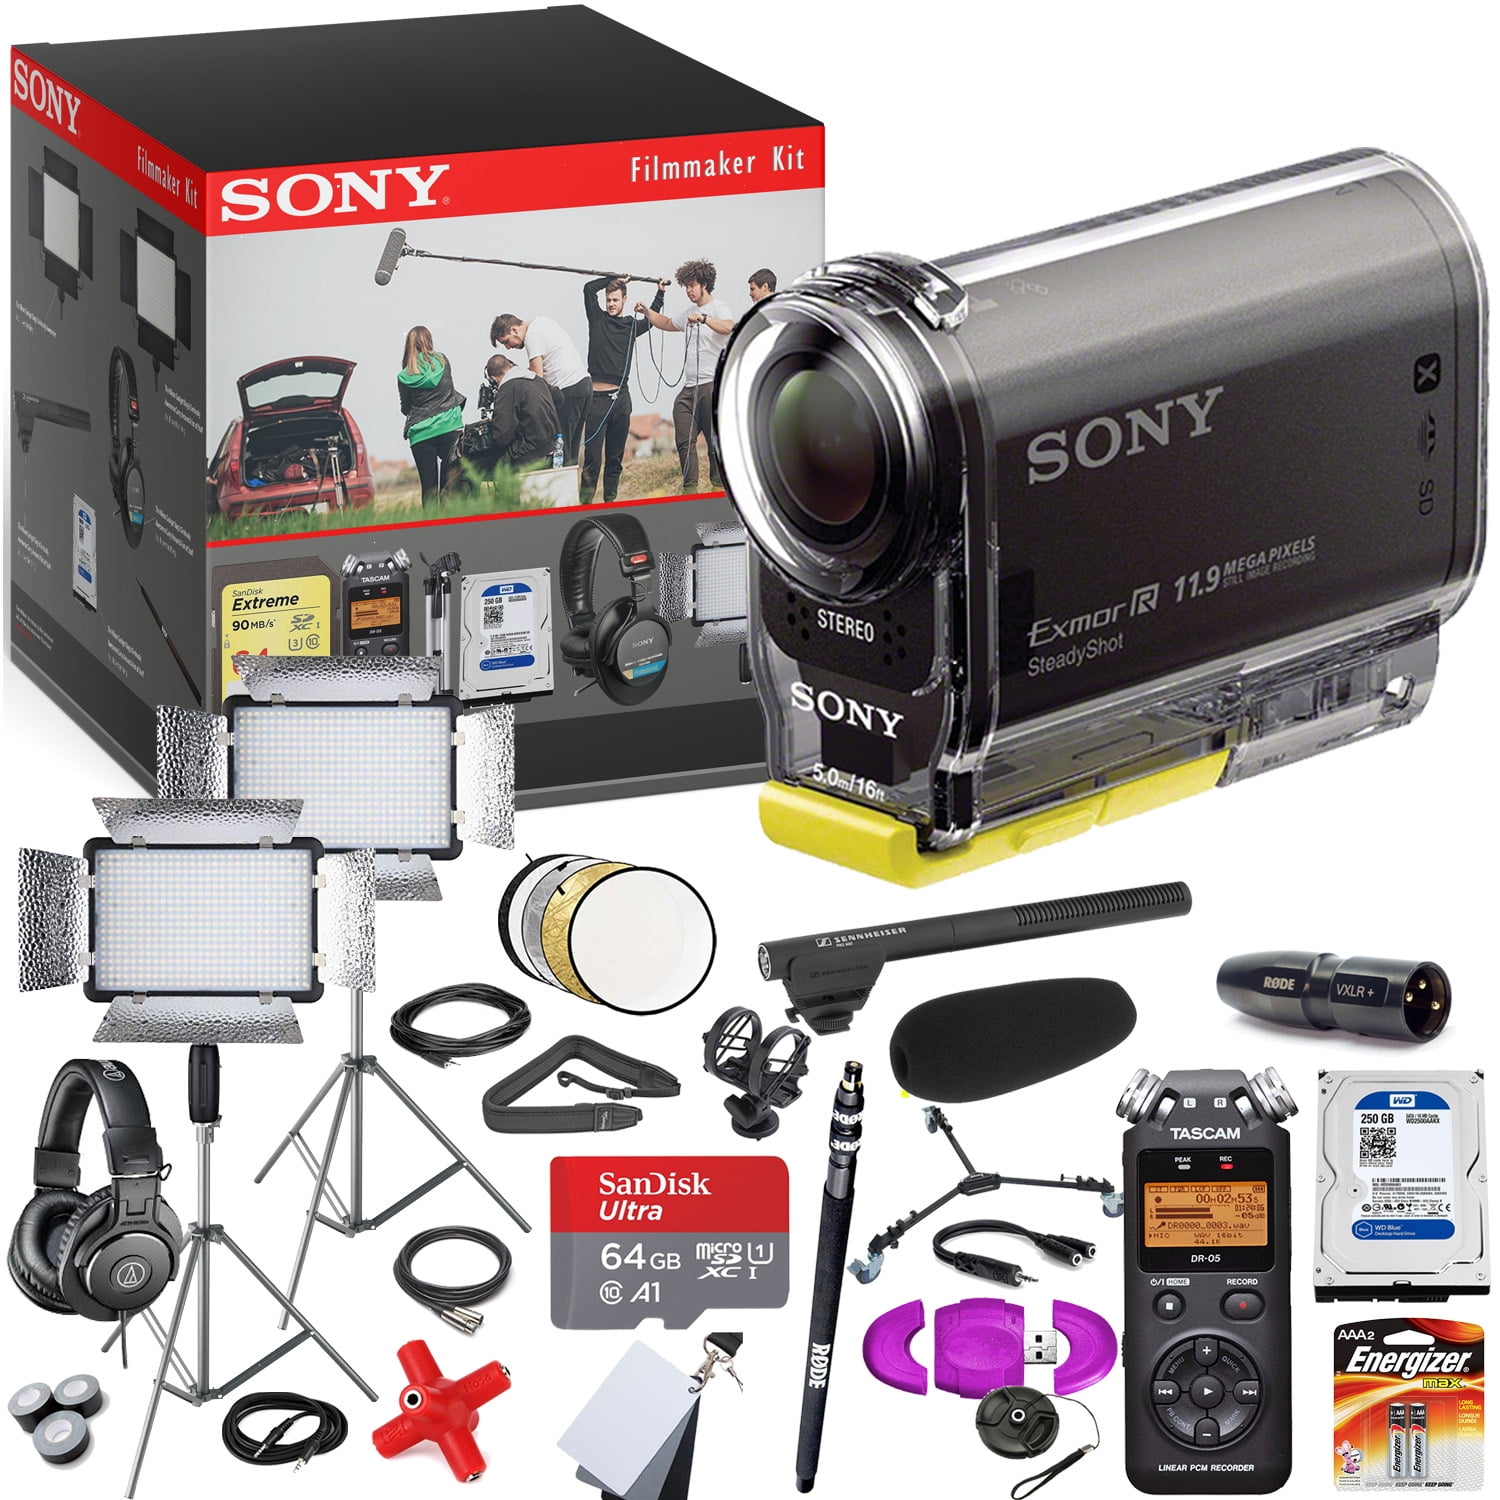 vos aanval leraar Sony HDR-AS50 Full HD Action Cam Pro Filmmaker Kit Includes Dual LED Lights  Head - Walmart.com